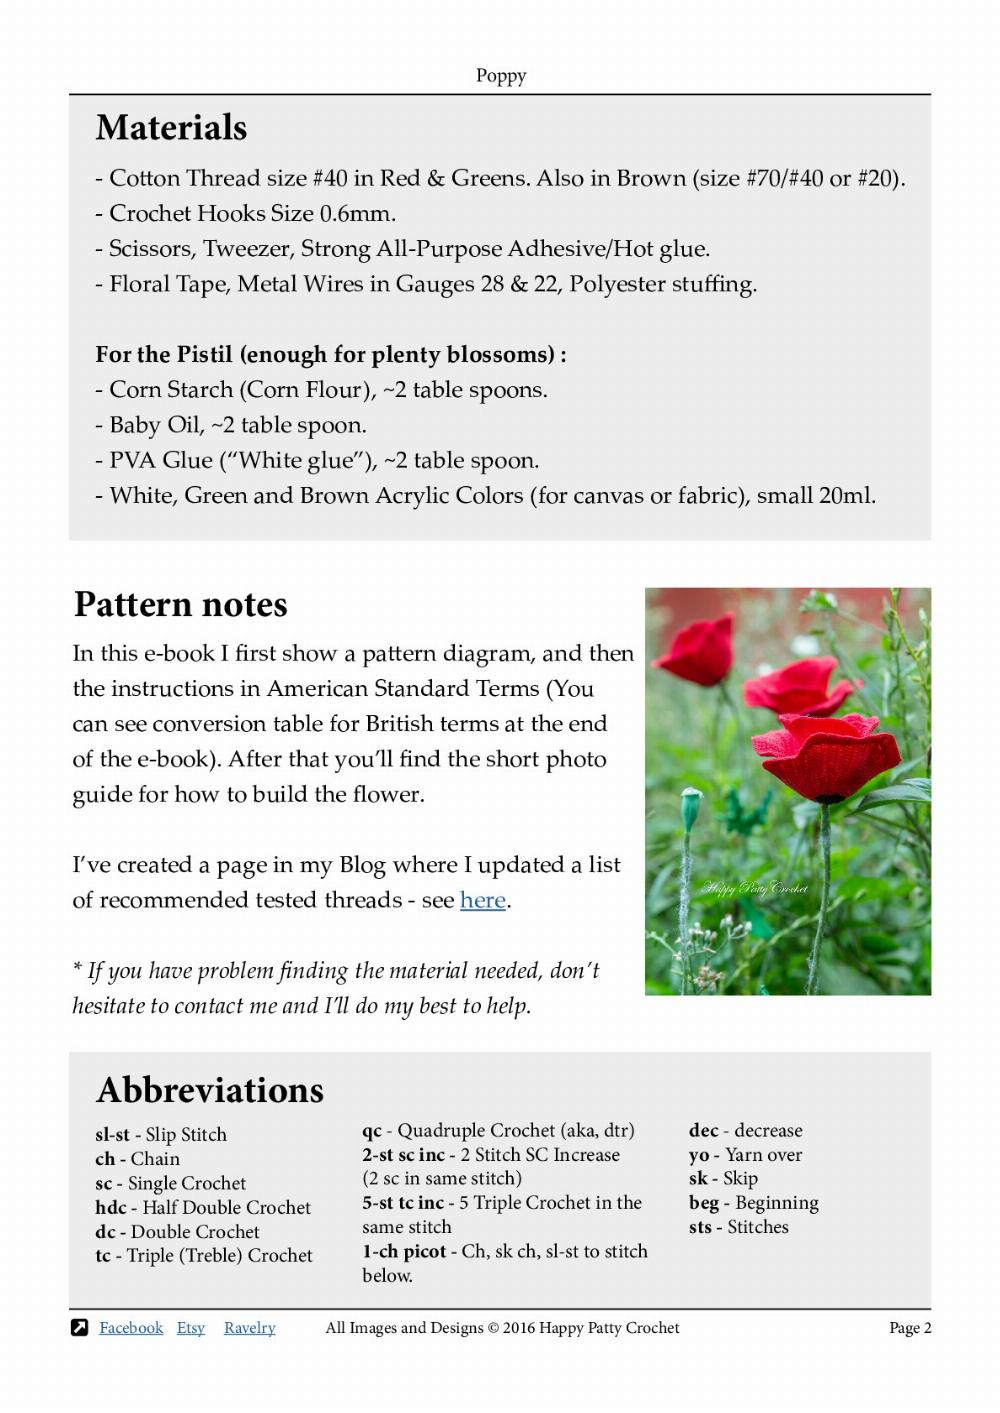 red Poppy flower crochet pattern